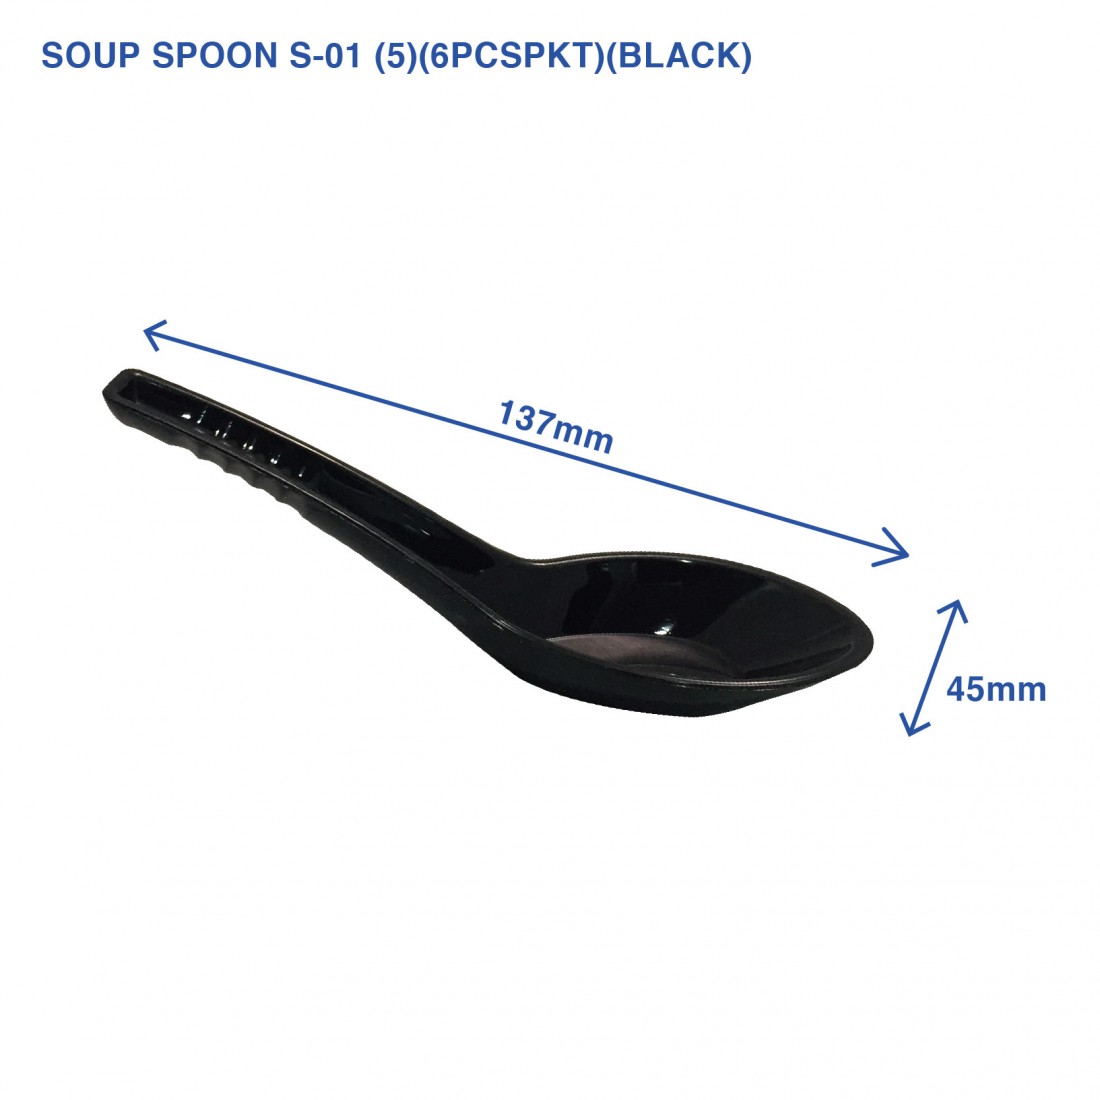 SOUP SPOON S-01 (5")(6PCS/PKT)(BLACK)